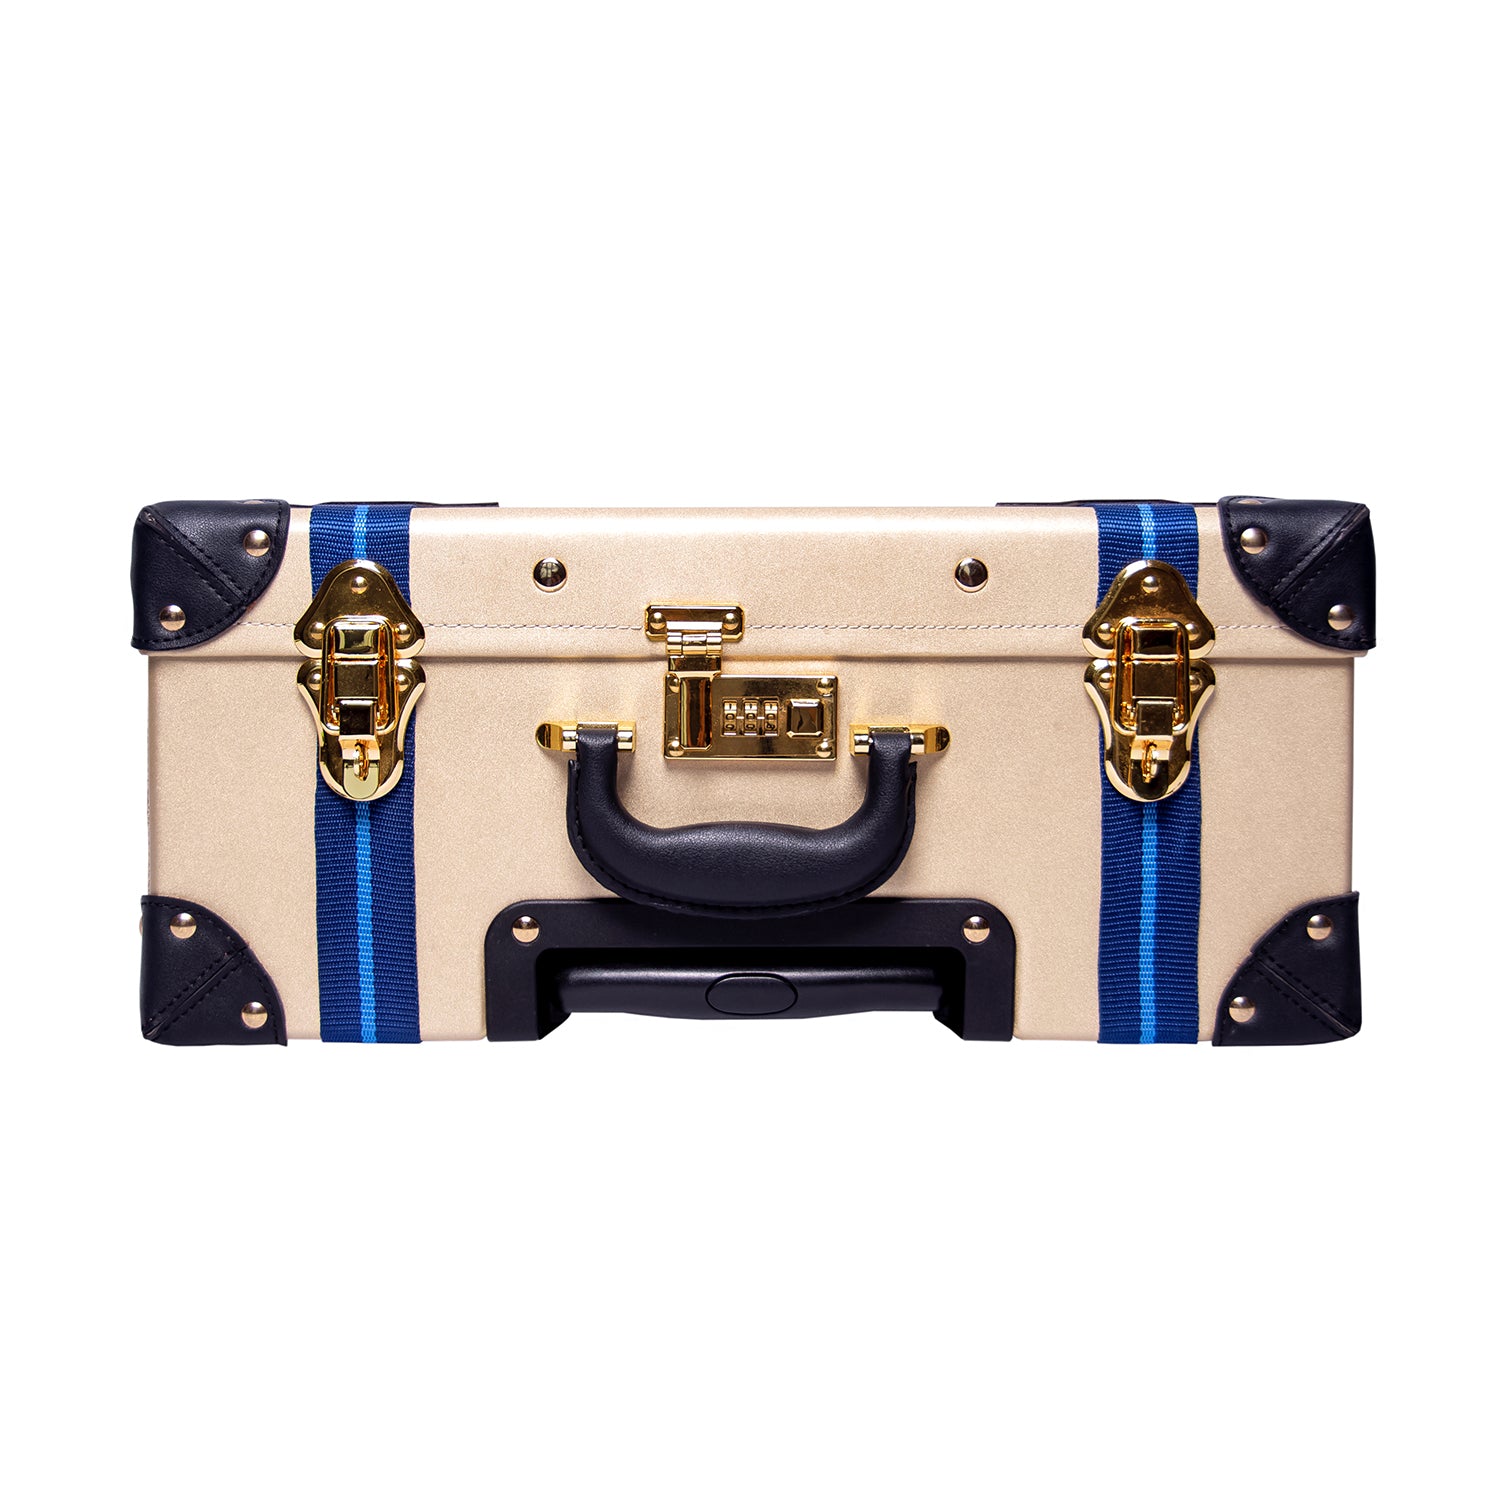 The Glastonbury Gold Suitcase